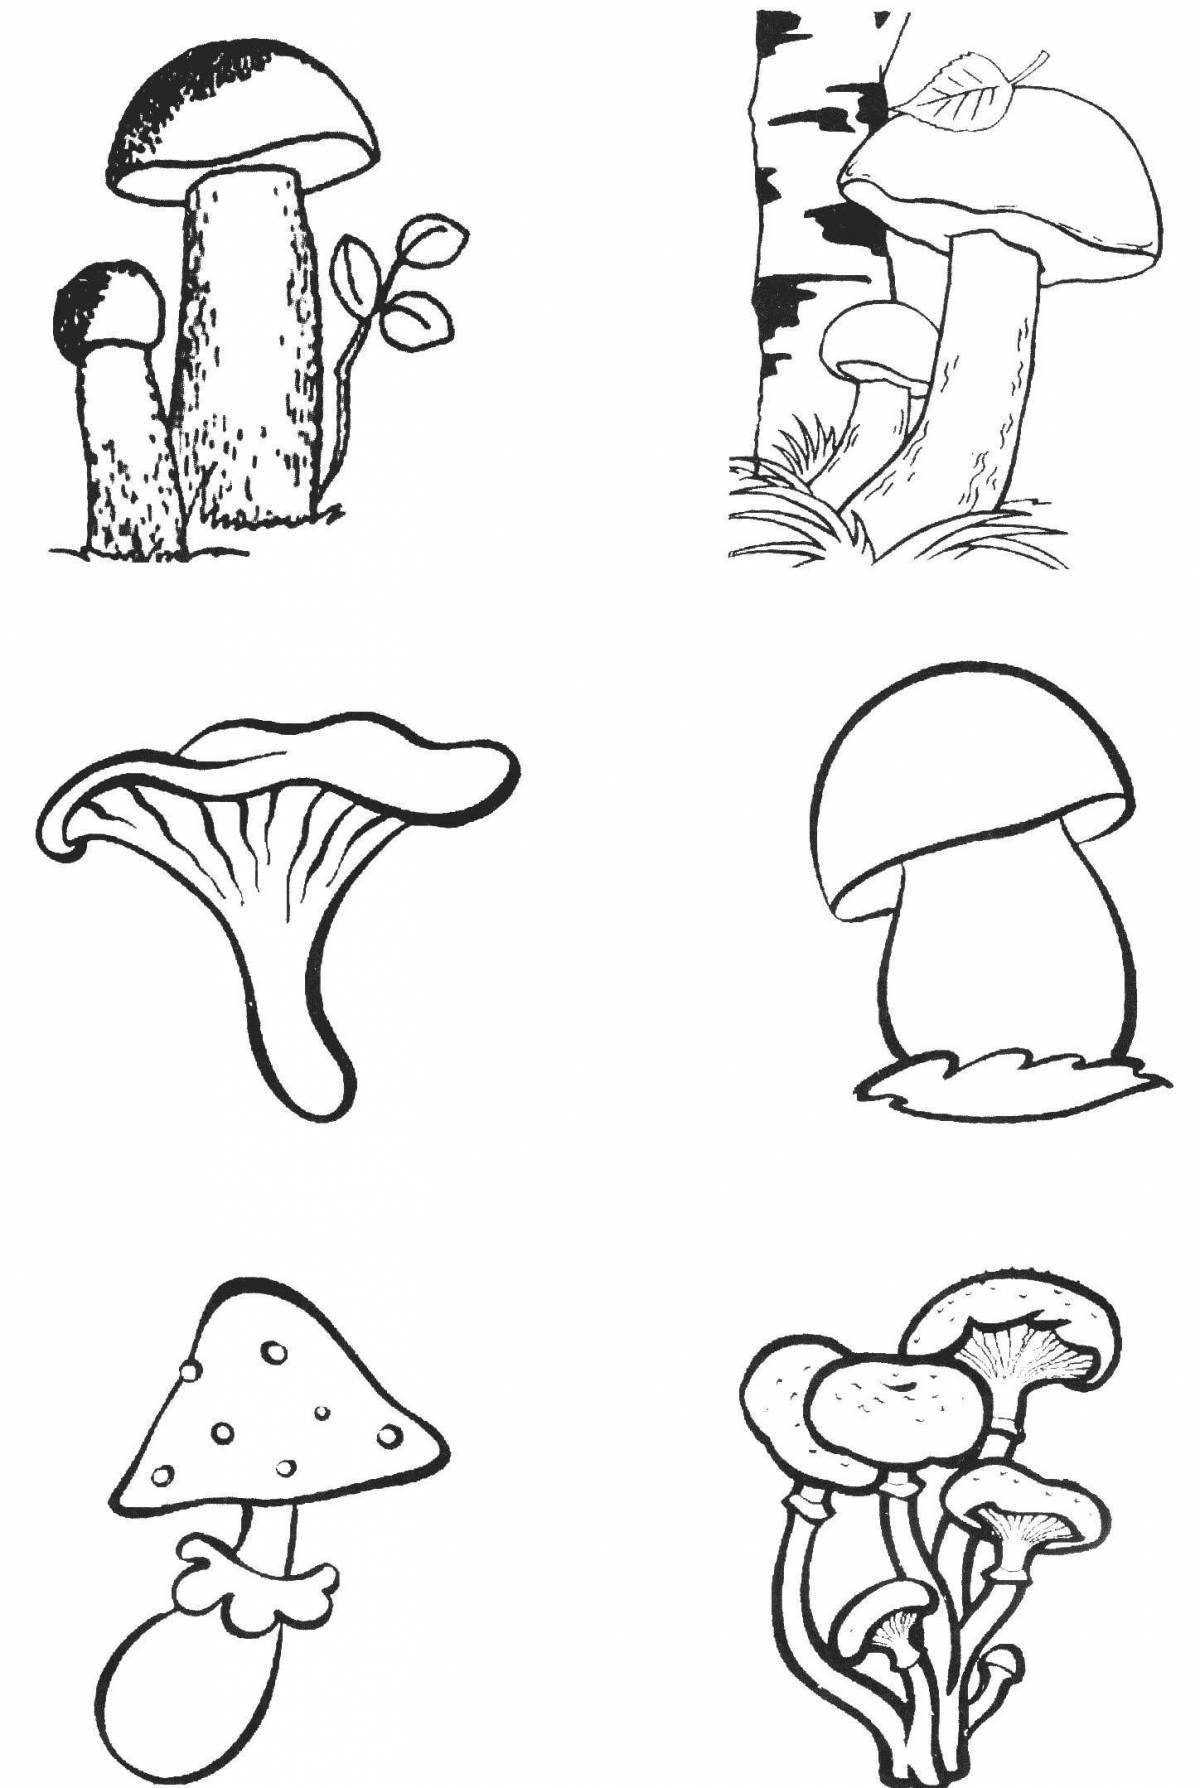 Playful edible mushrooms coloring page